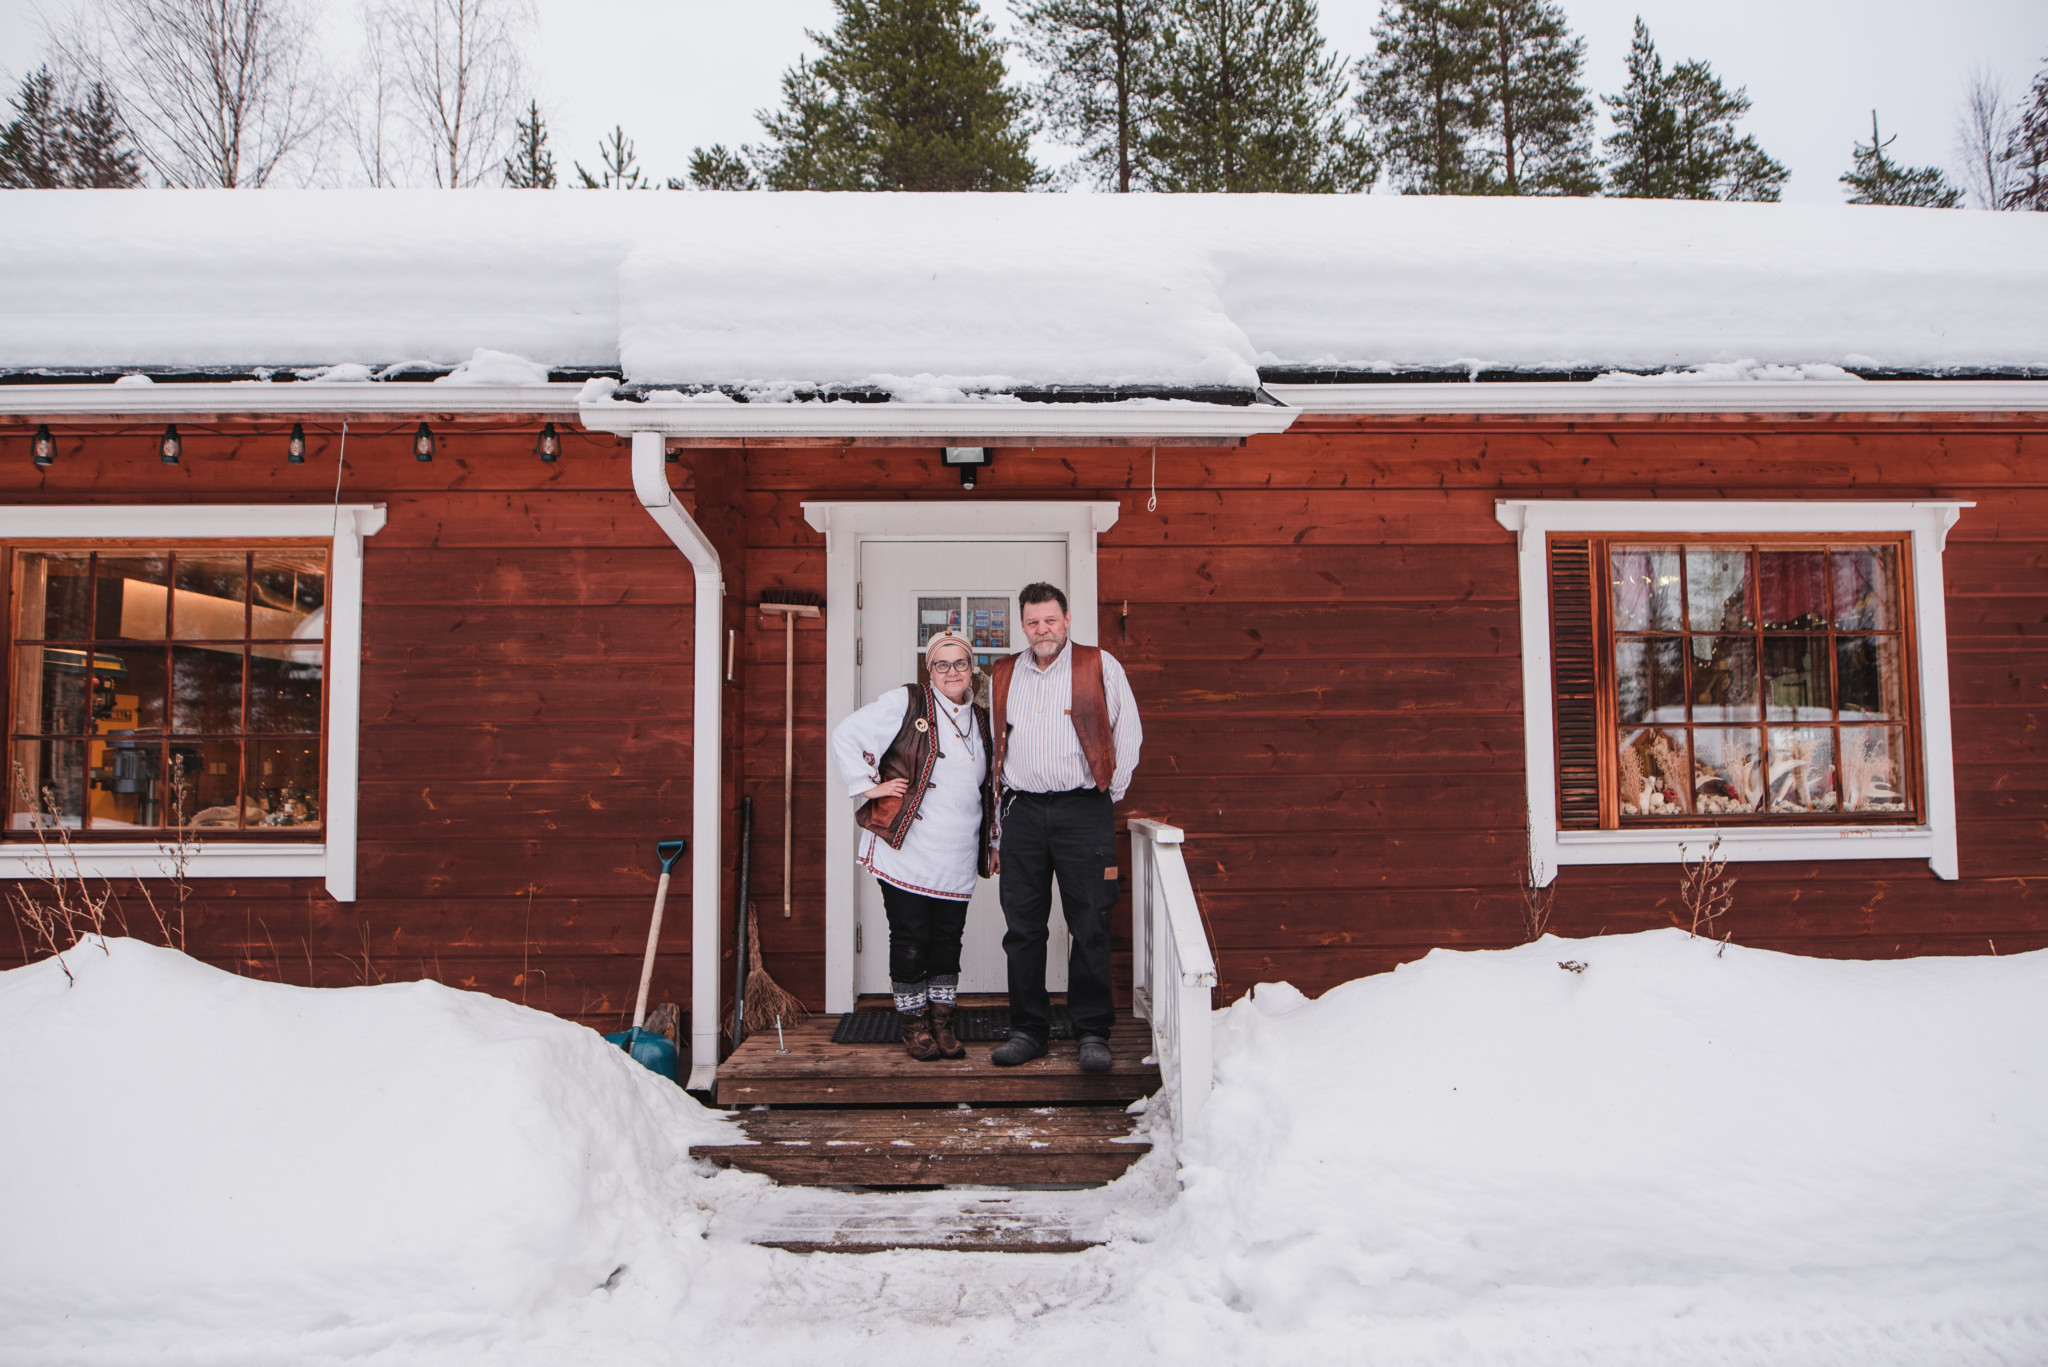 Irene and Ari Kangasniemi Hornwork in Rovaniemi Lapland Finland